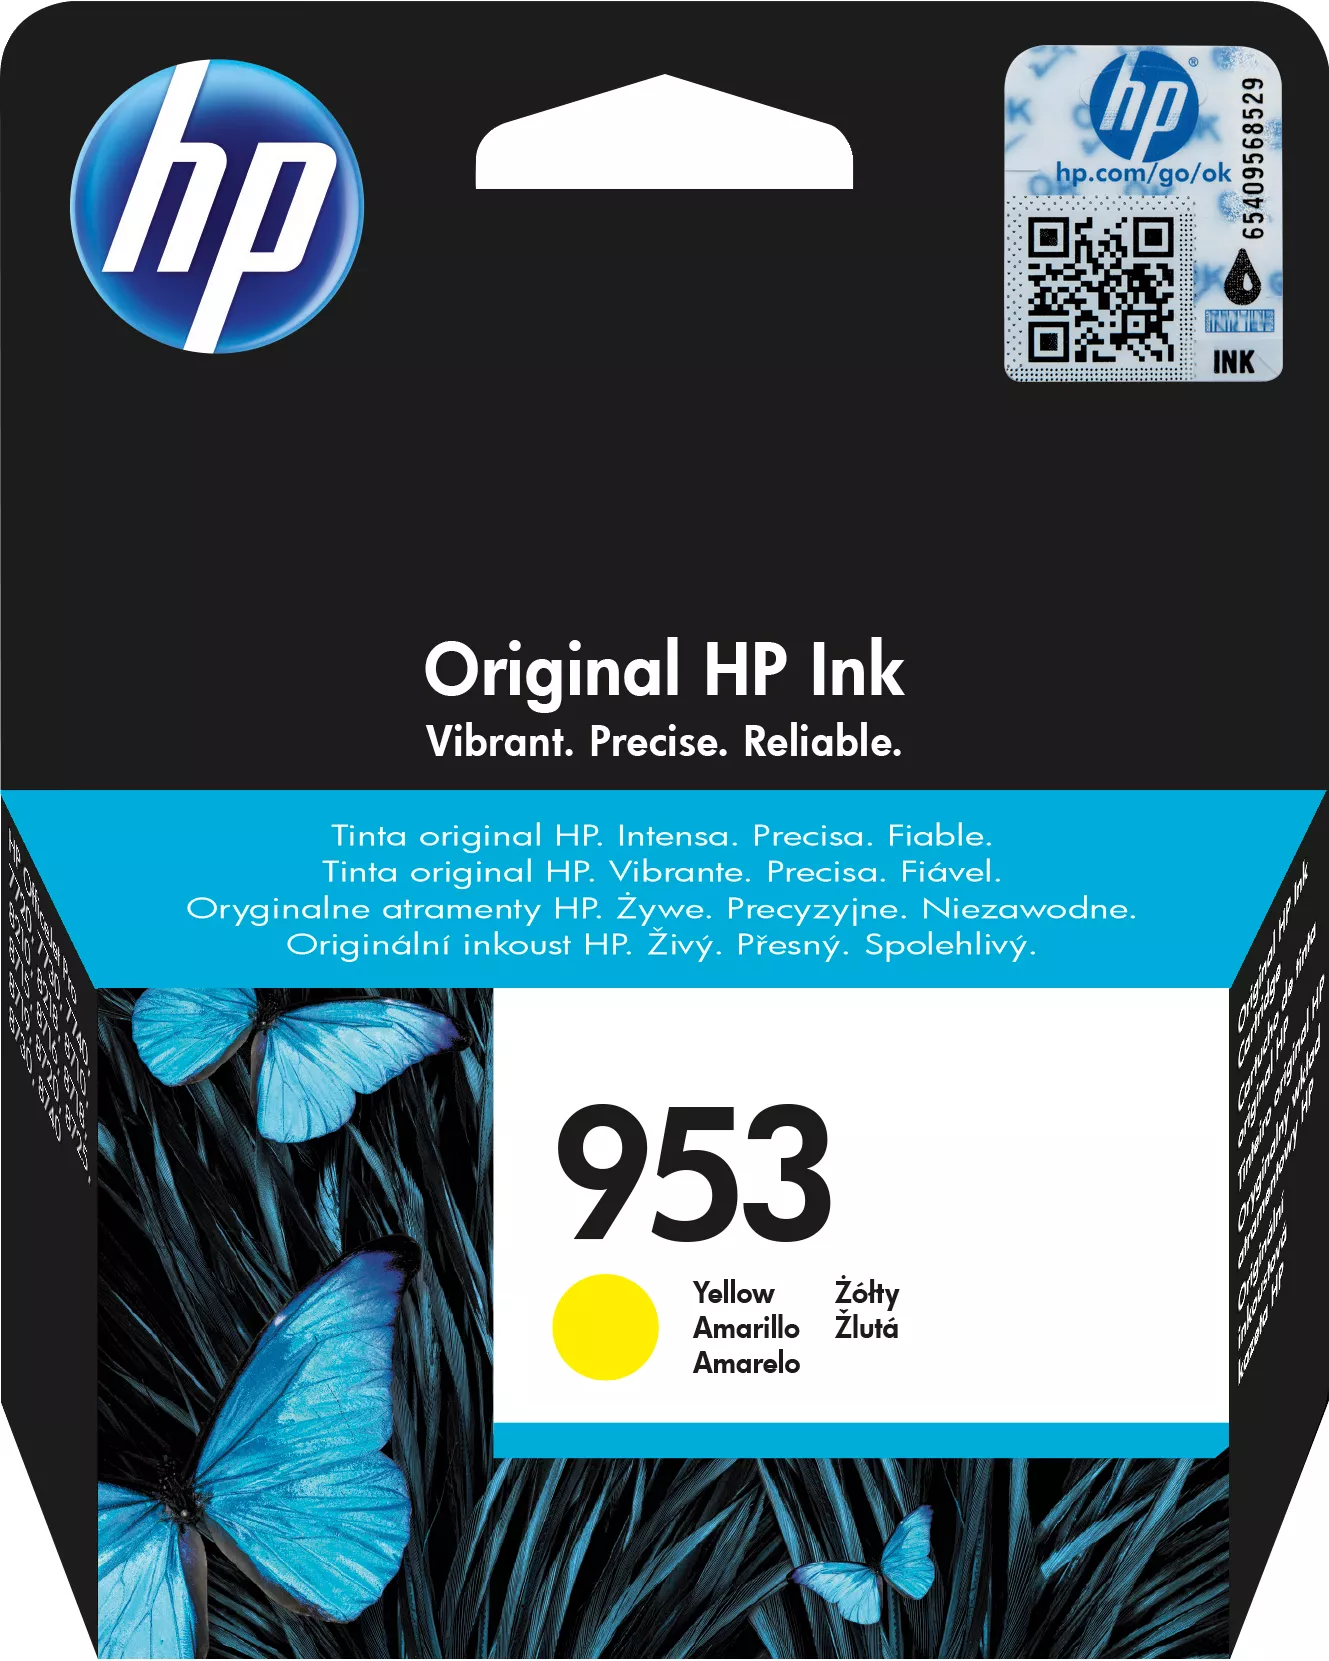 Achat HP 953 original Ink cartridge F6U14AE BGX Yellow 700 Pages au meilleur prix